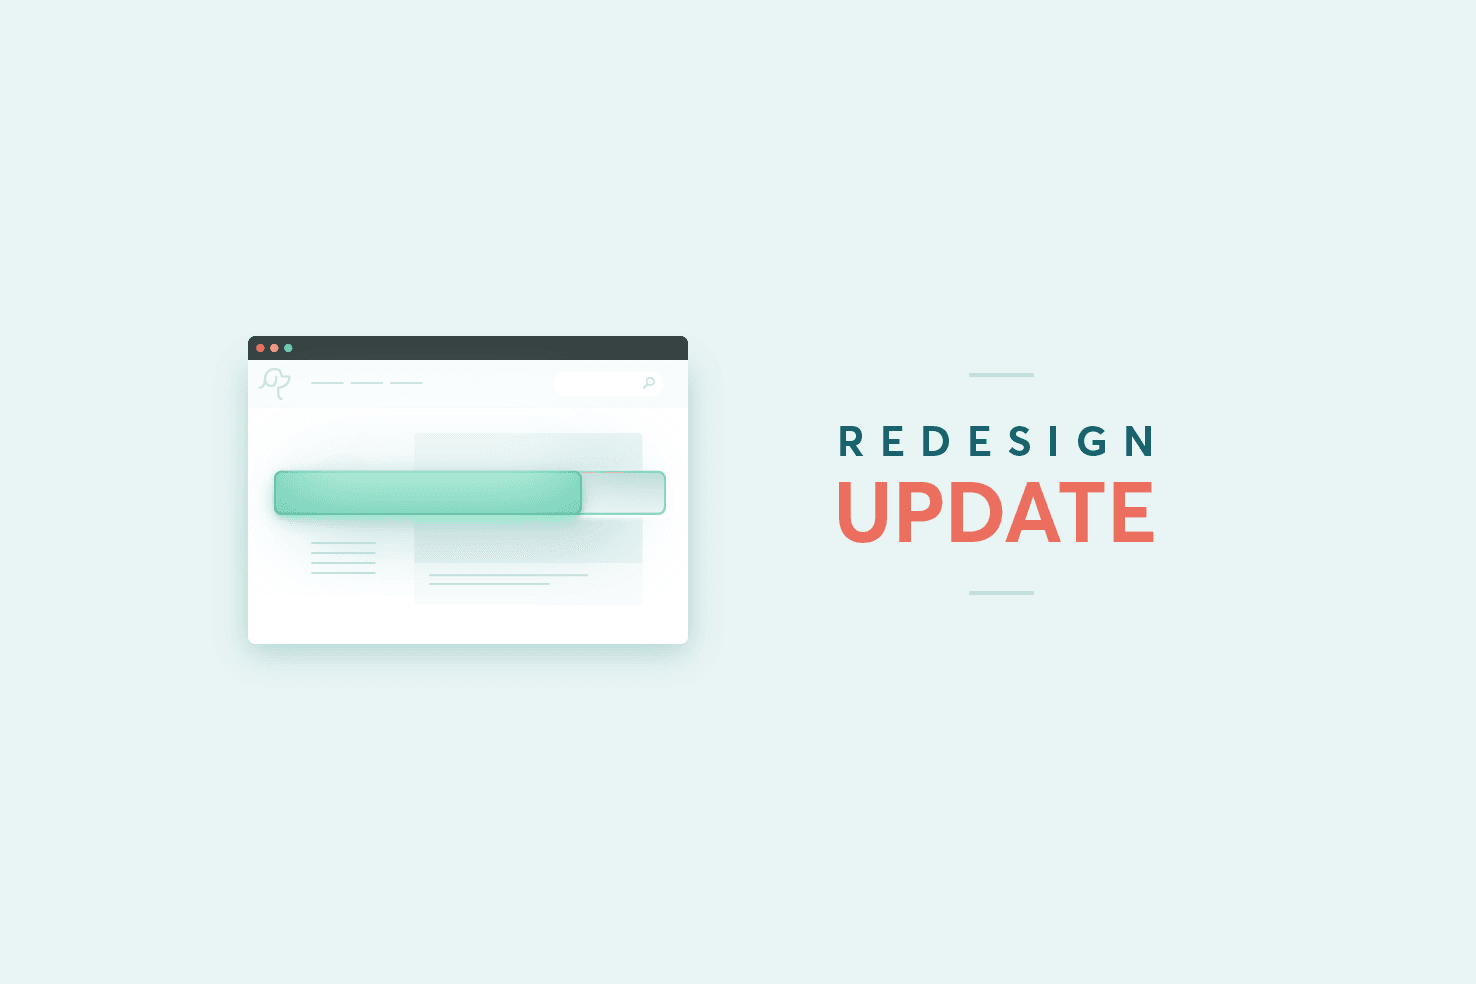 Redesign progress update (featured image)